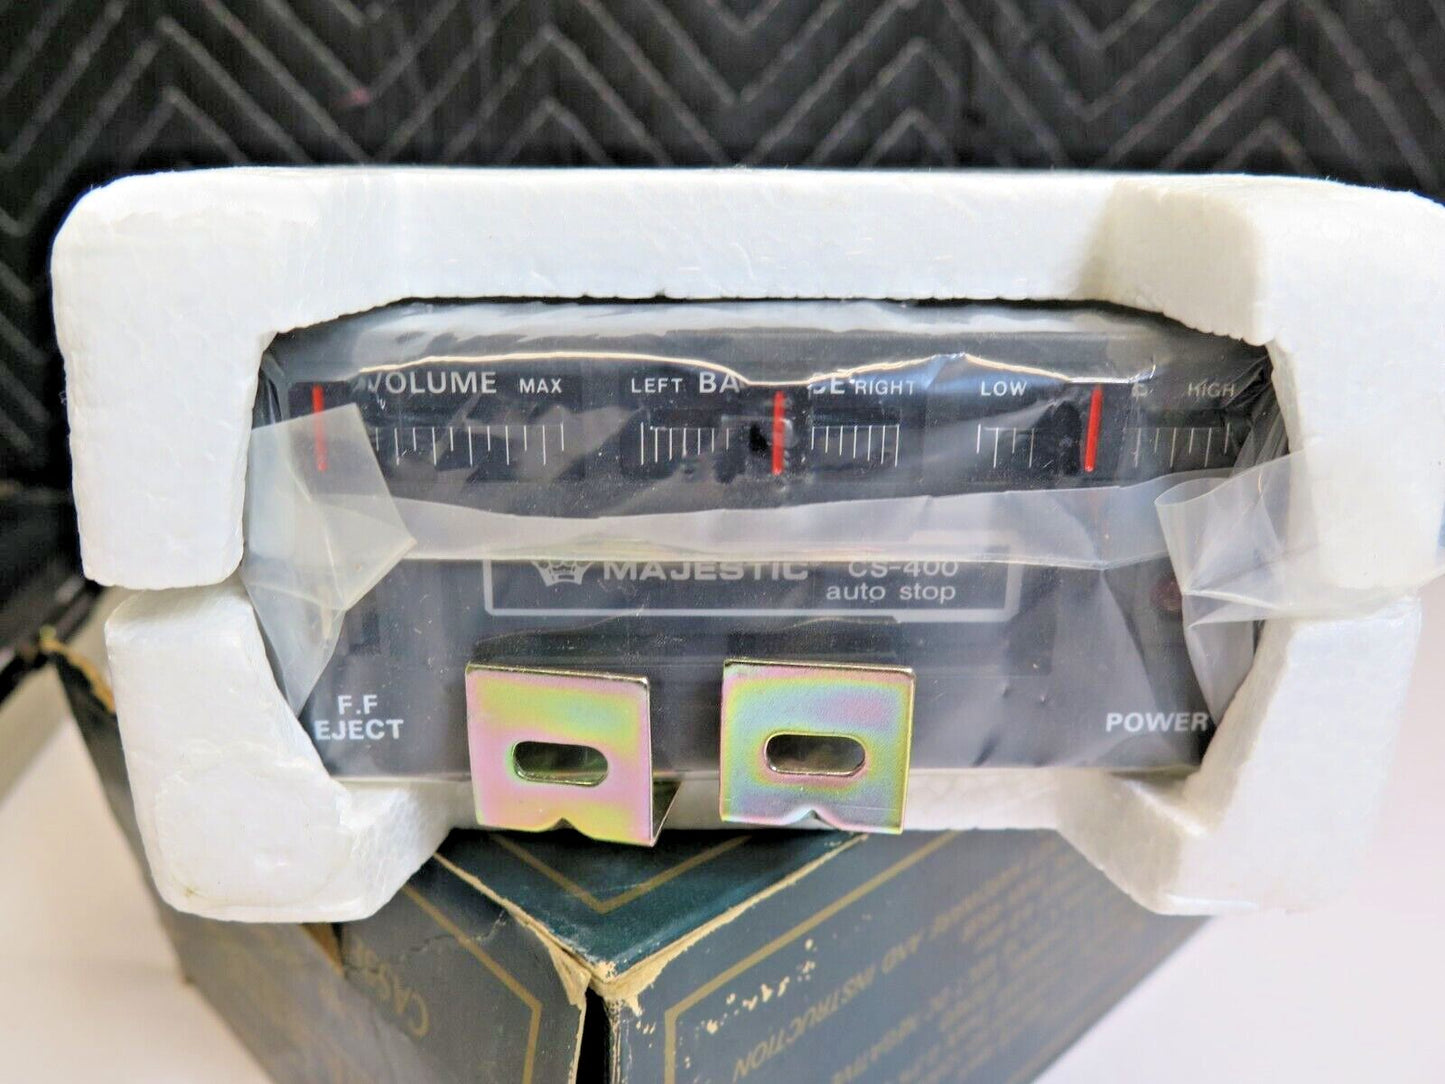 NOS Majestic Car Stereo Cassette Player CS-400 Vintage